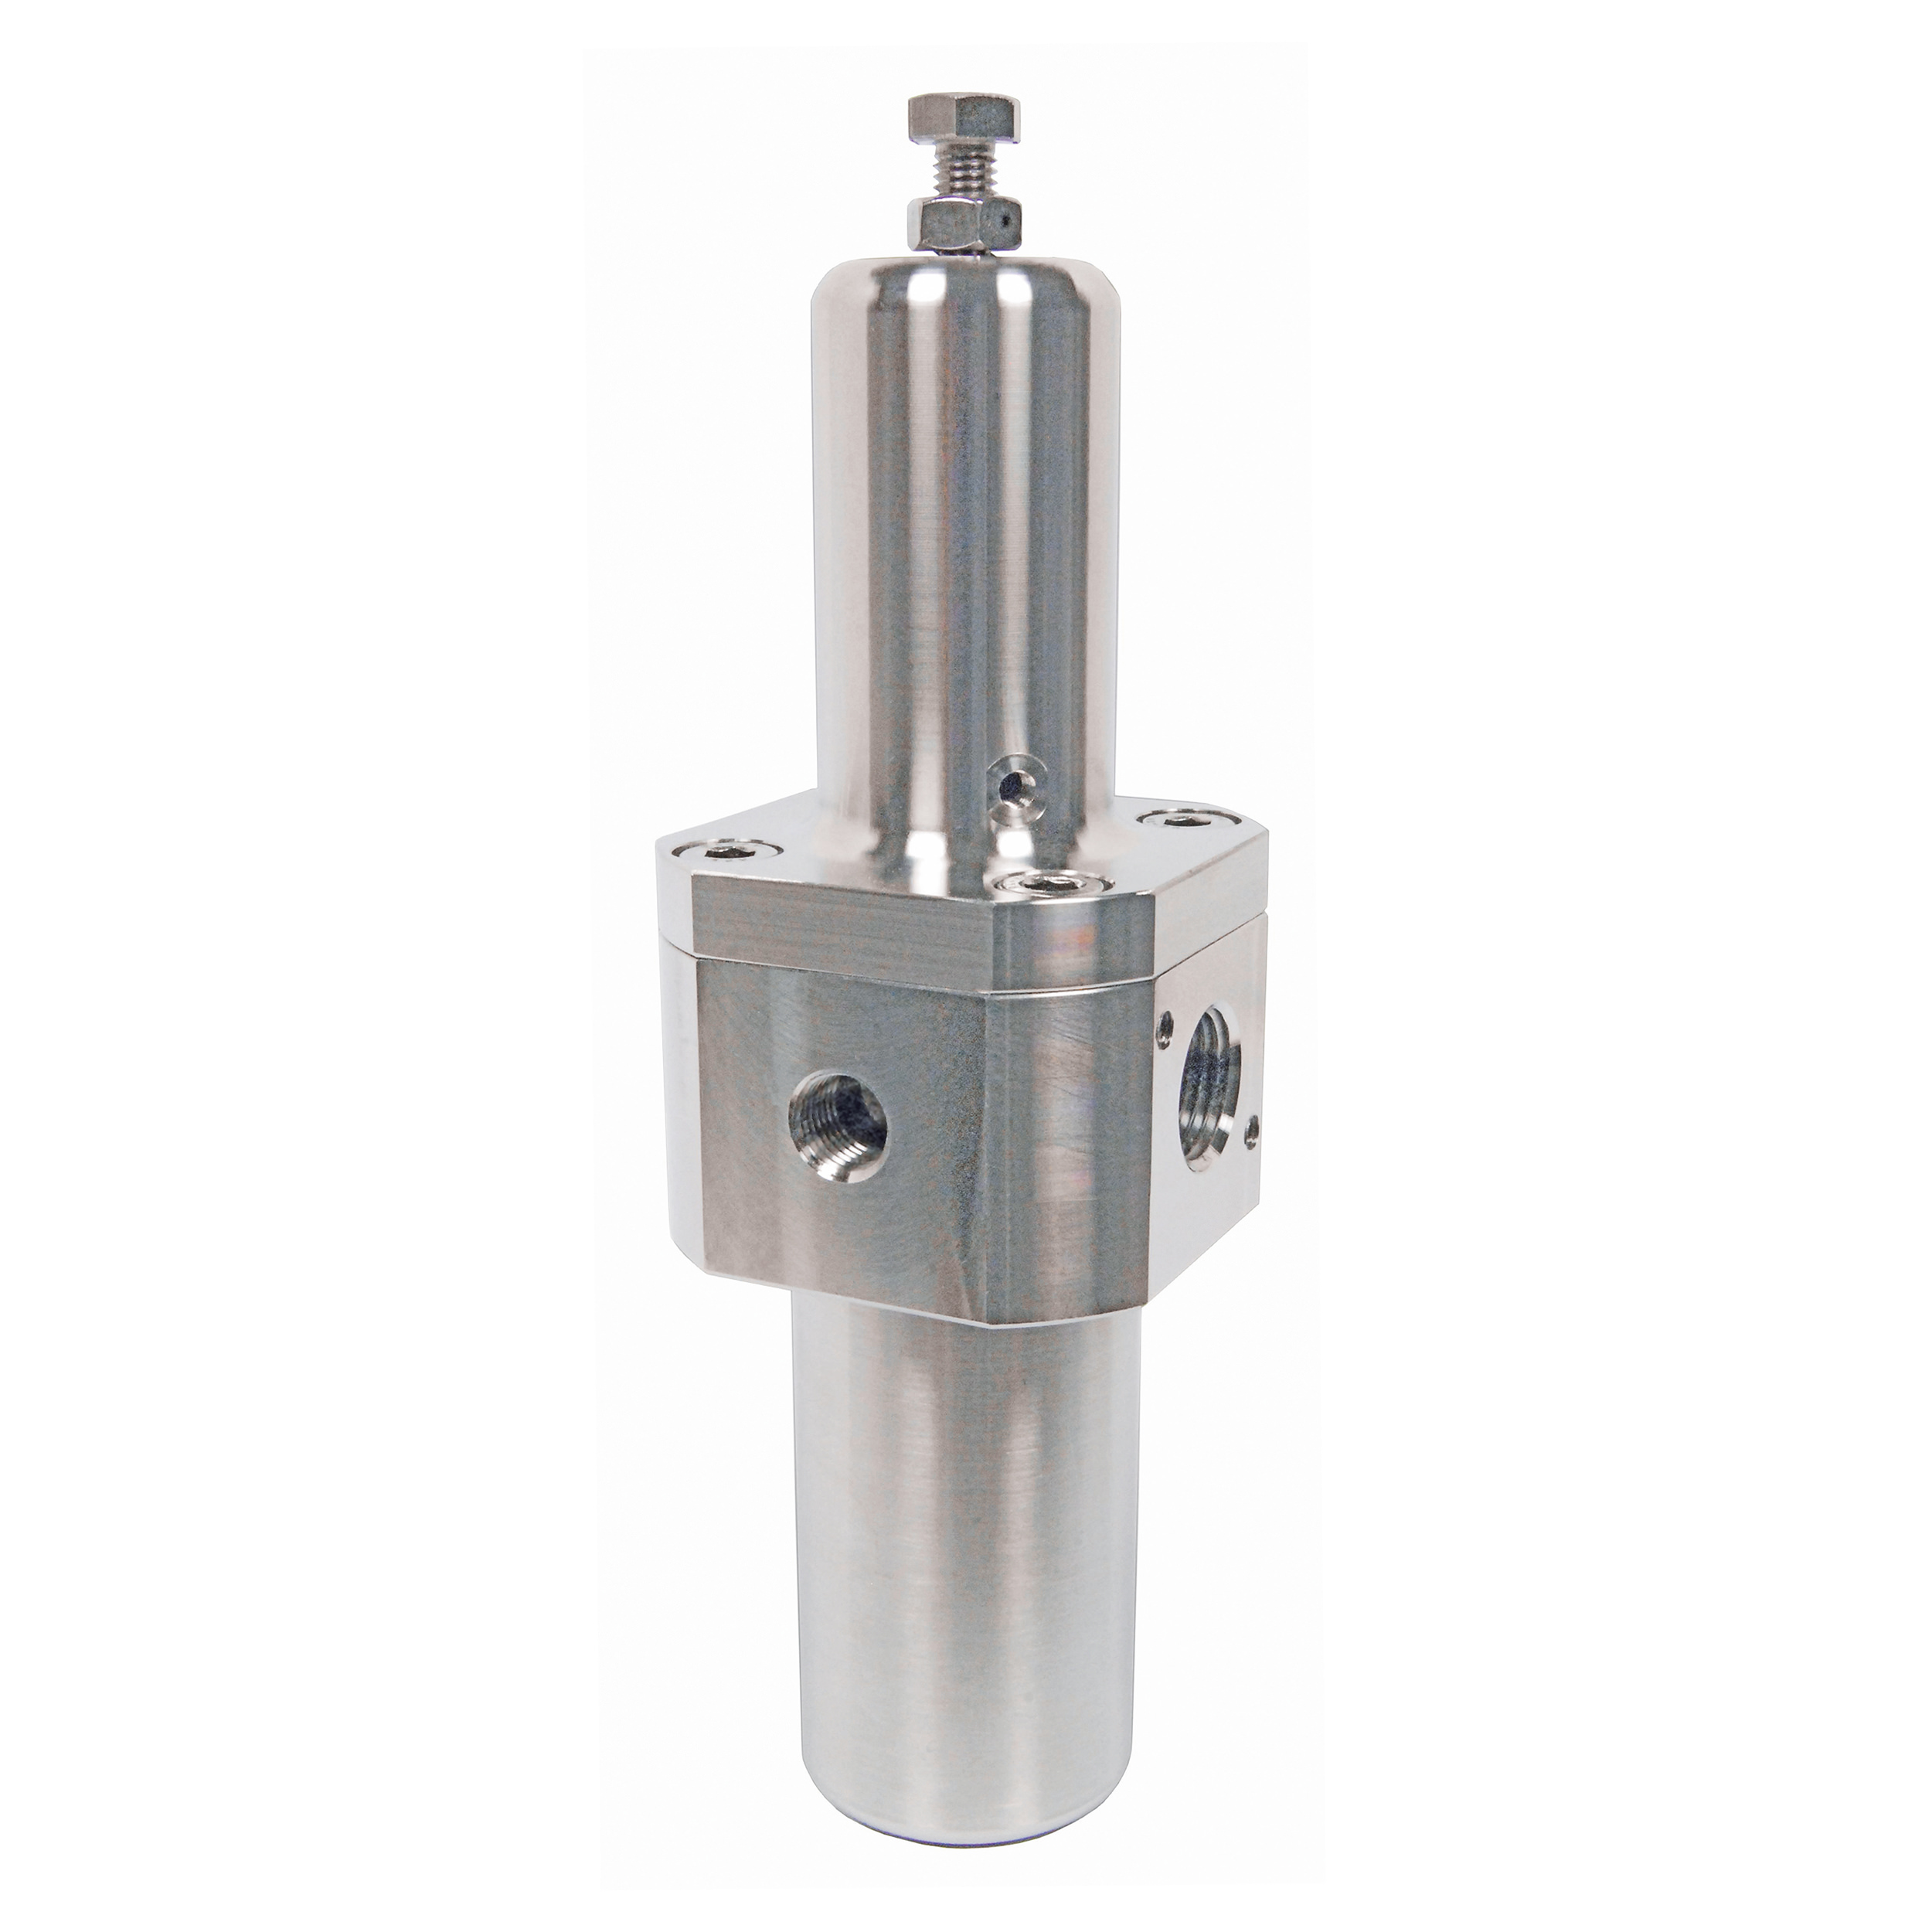 Filter pressure regulator type 690 stainless steel, gauge excl., BG 30, G⅜, 2.9–43.5 psi, man. drain valve, QN: 3,000 Nl/min